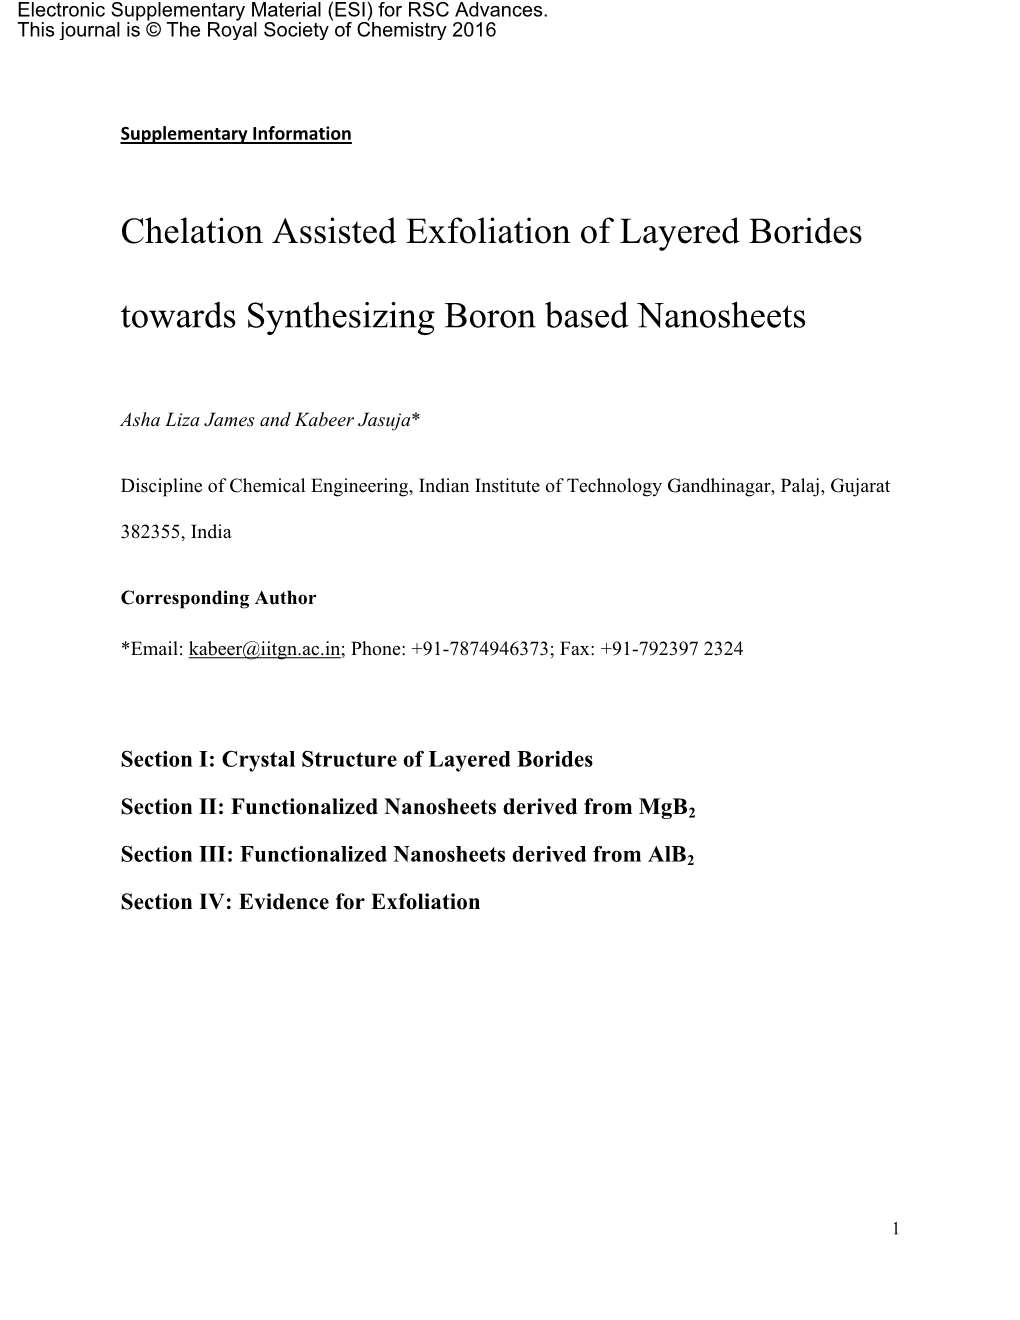 Chelation Assisted Exfoliation of Layered Borides Towards